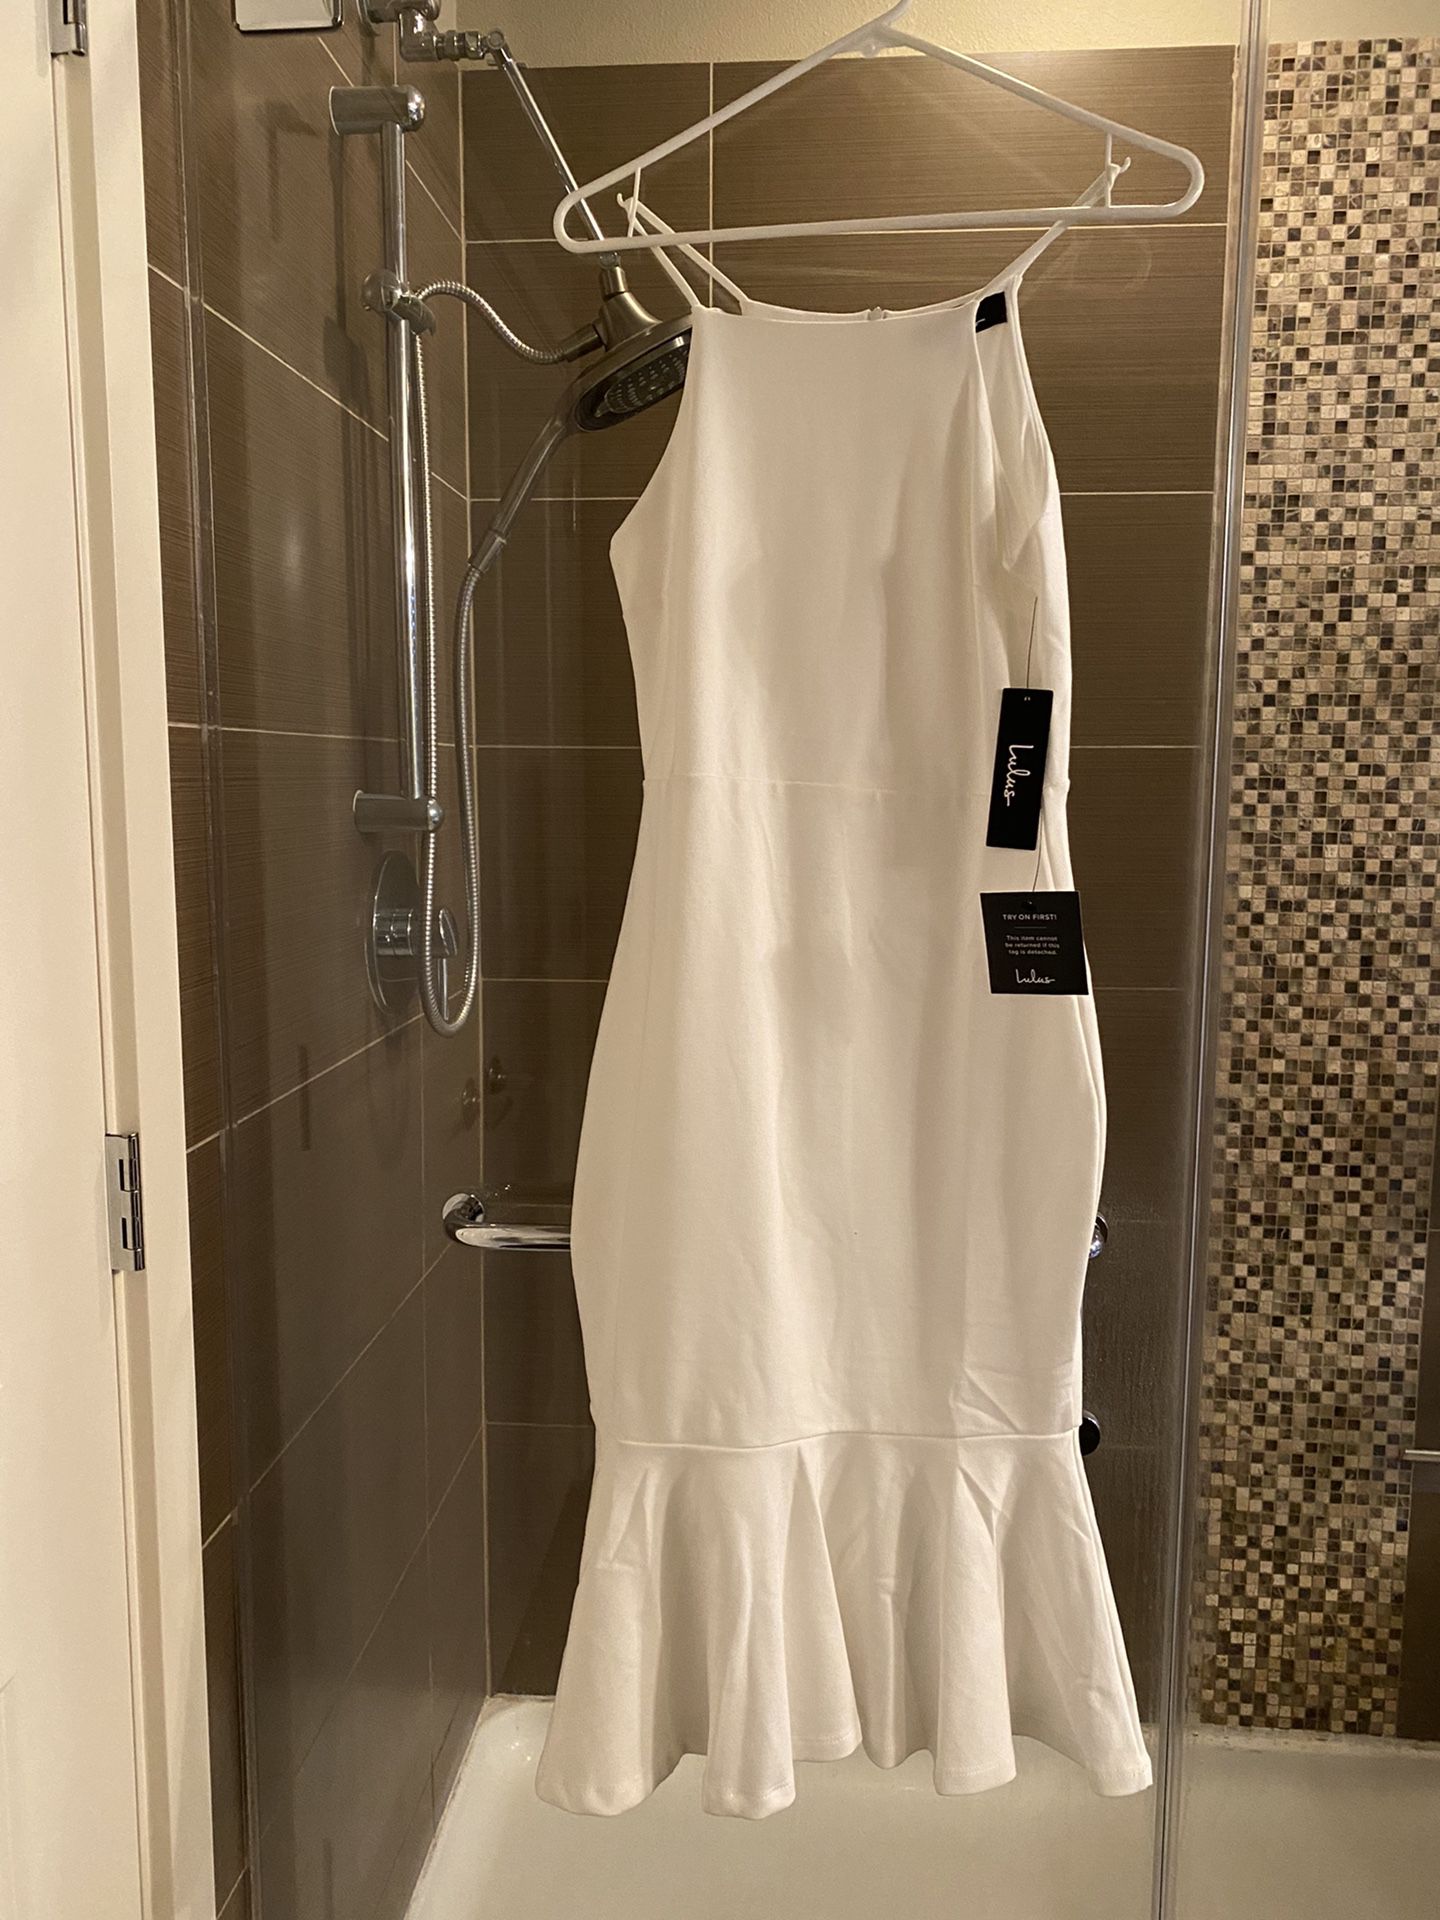 LULUS.com Brand New White Dress | SIZE SMALL